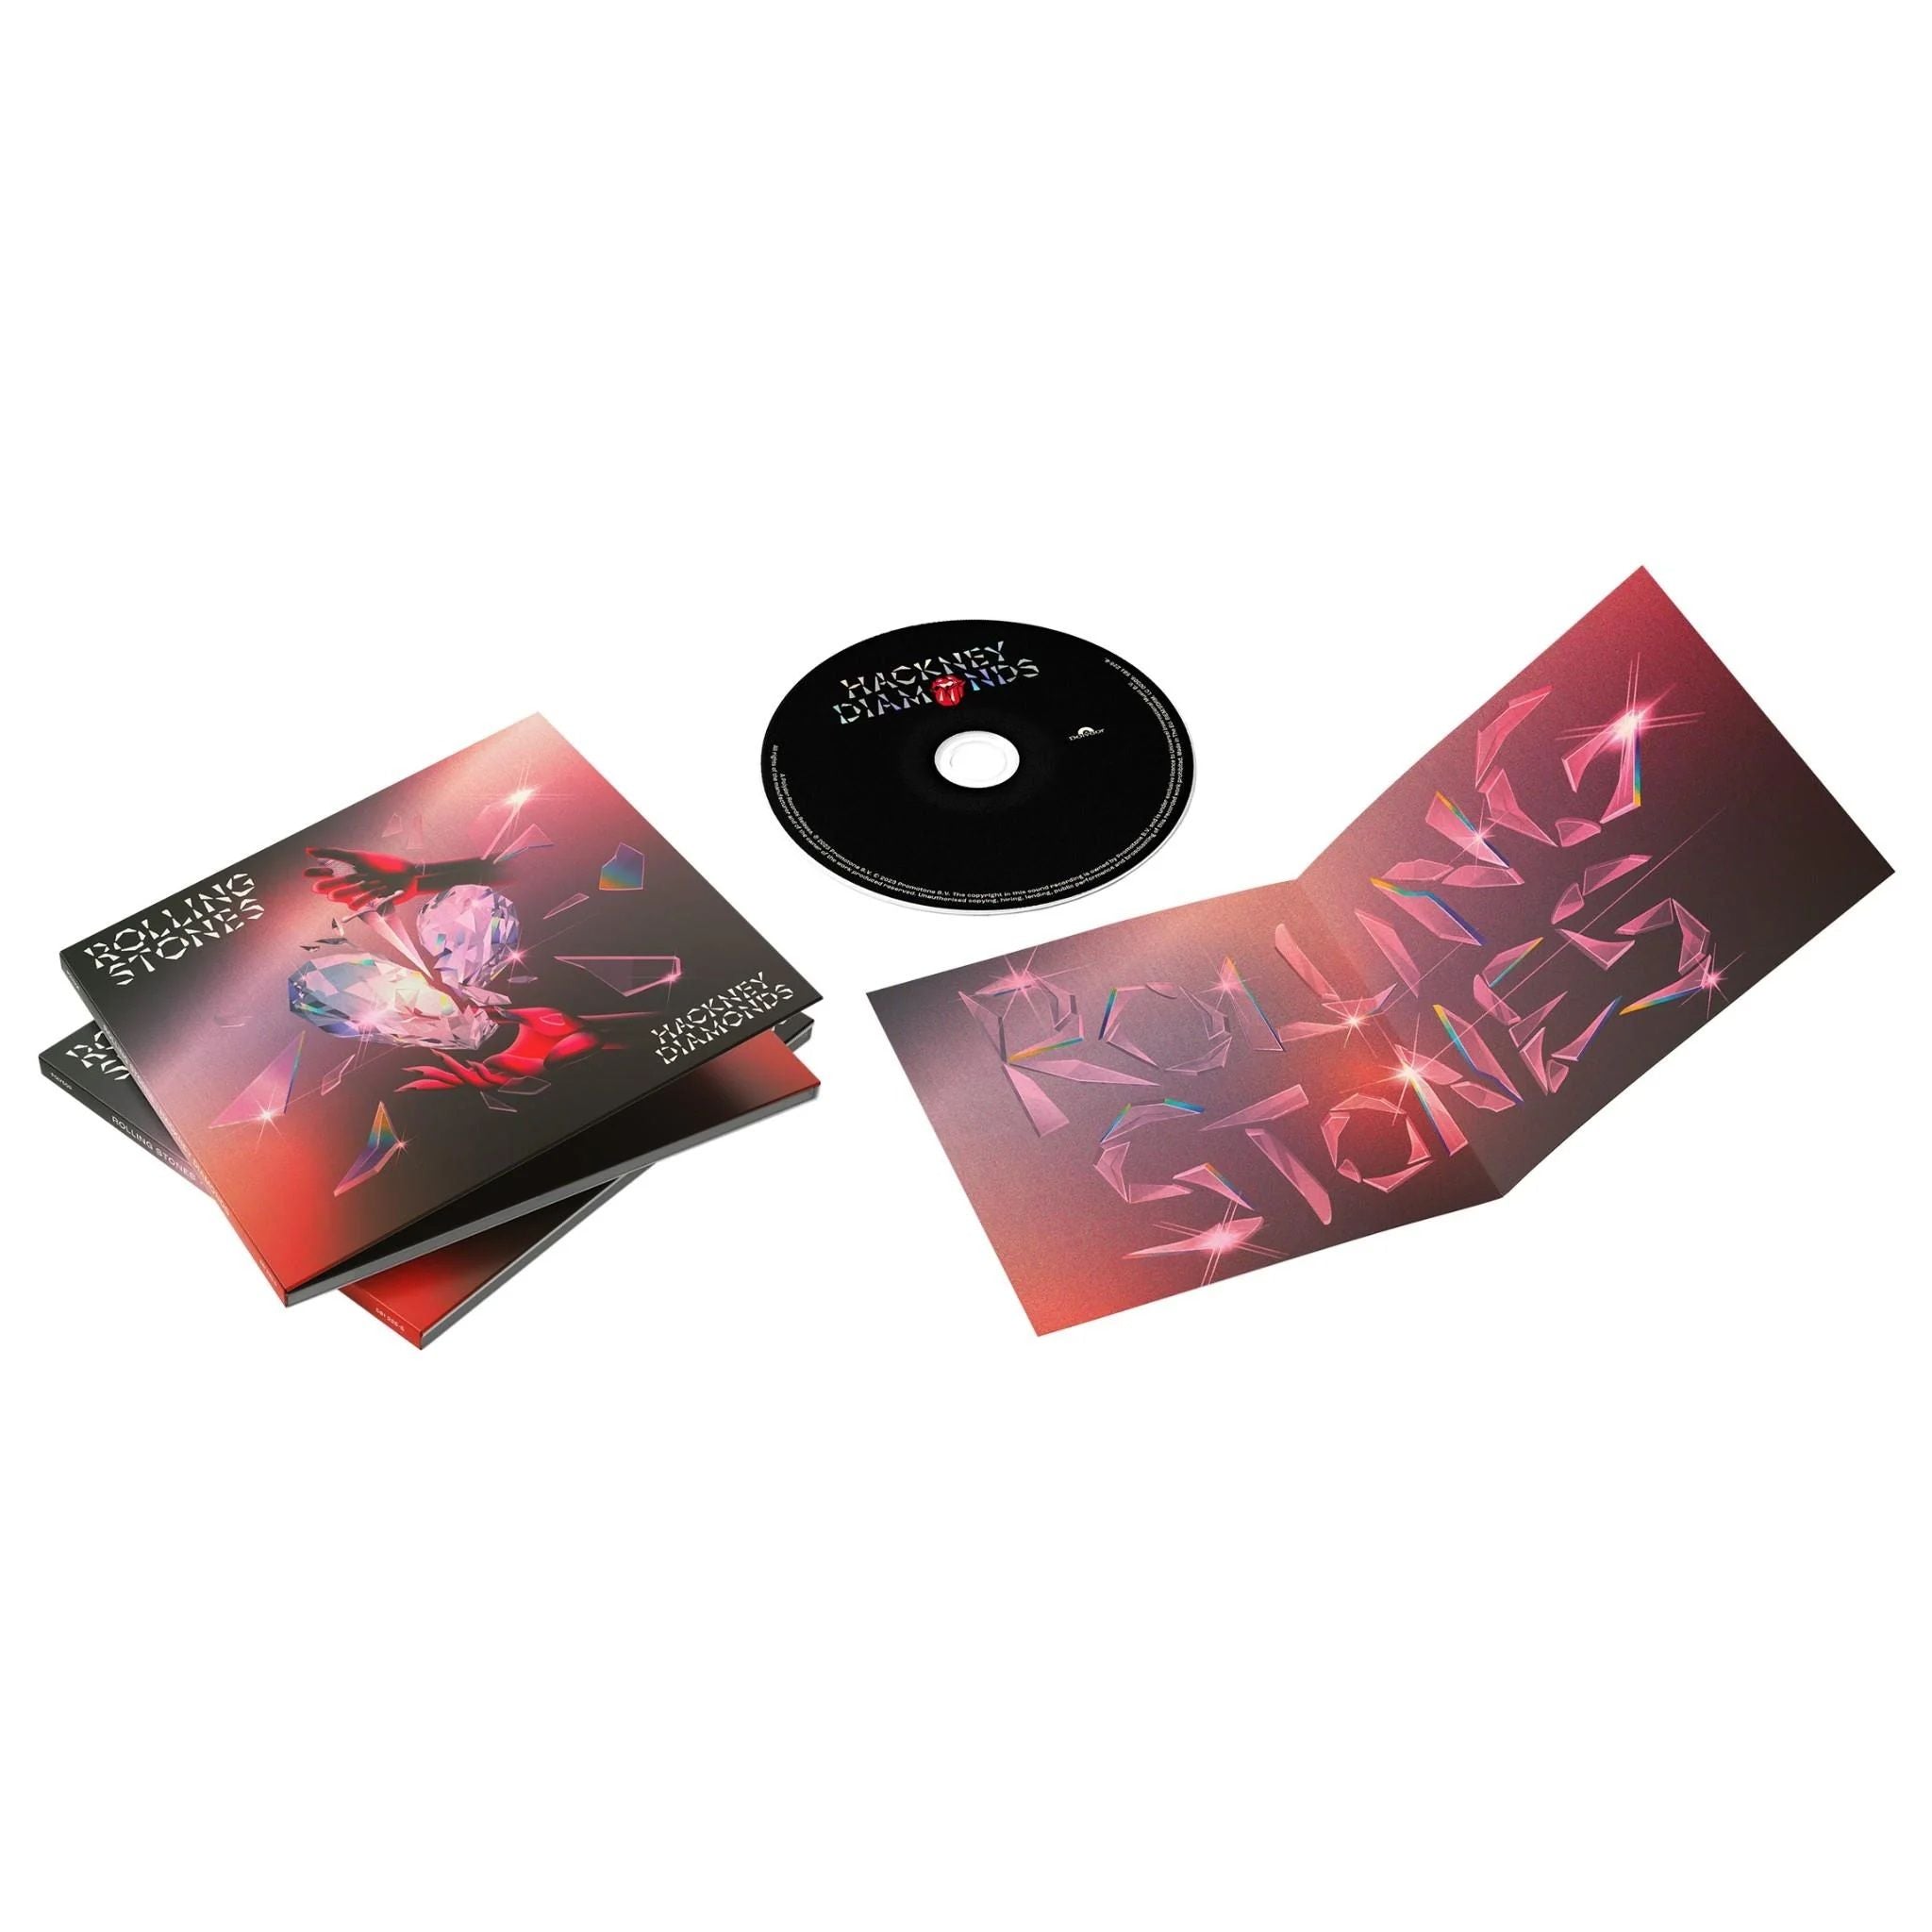 Rolling Stones - Hackney Diamonds (Ltd. Ed. digipak with 20pg booklet) - CD - New